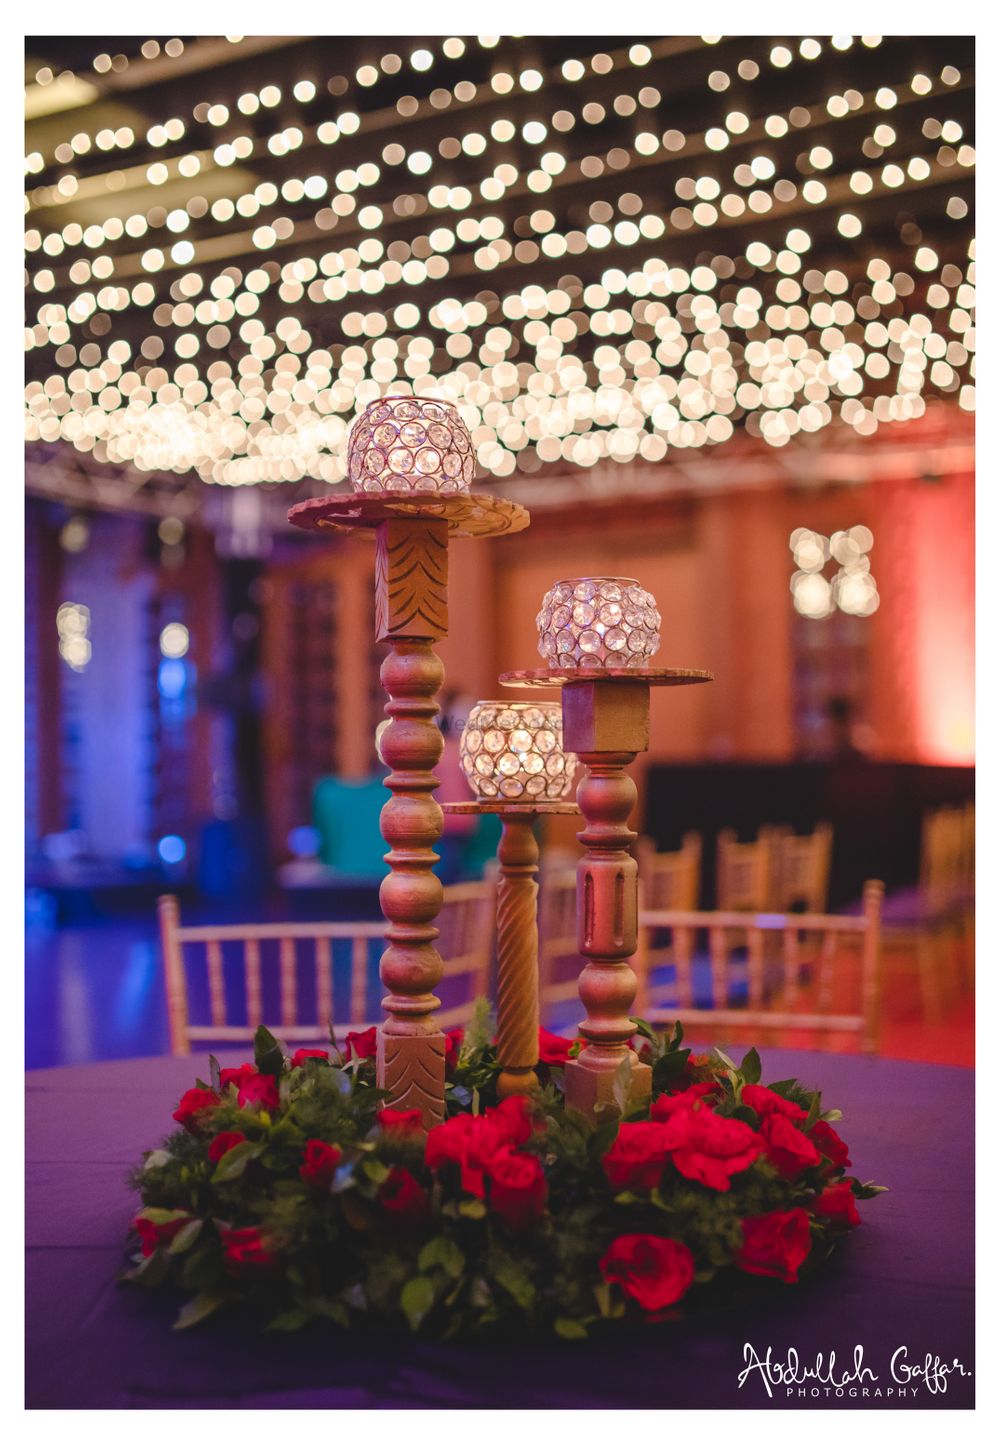 Photo of Centrepiece idea for moroccan theme decor using candlesticks